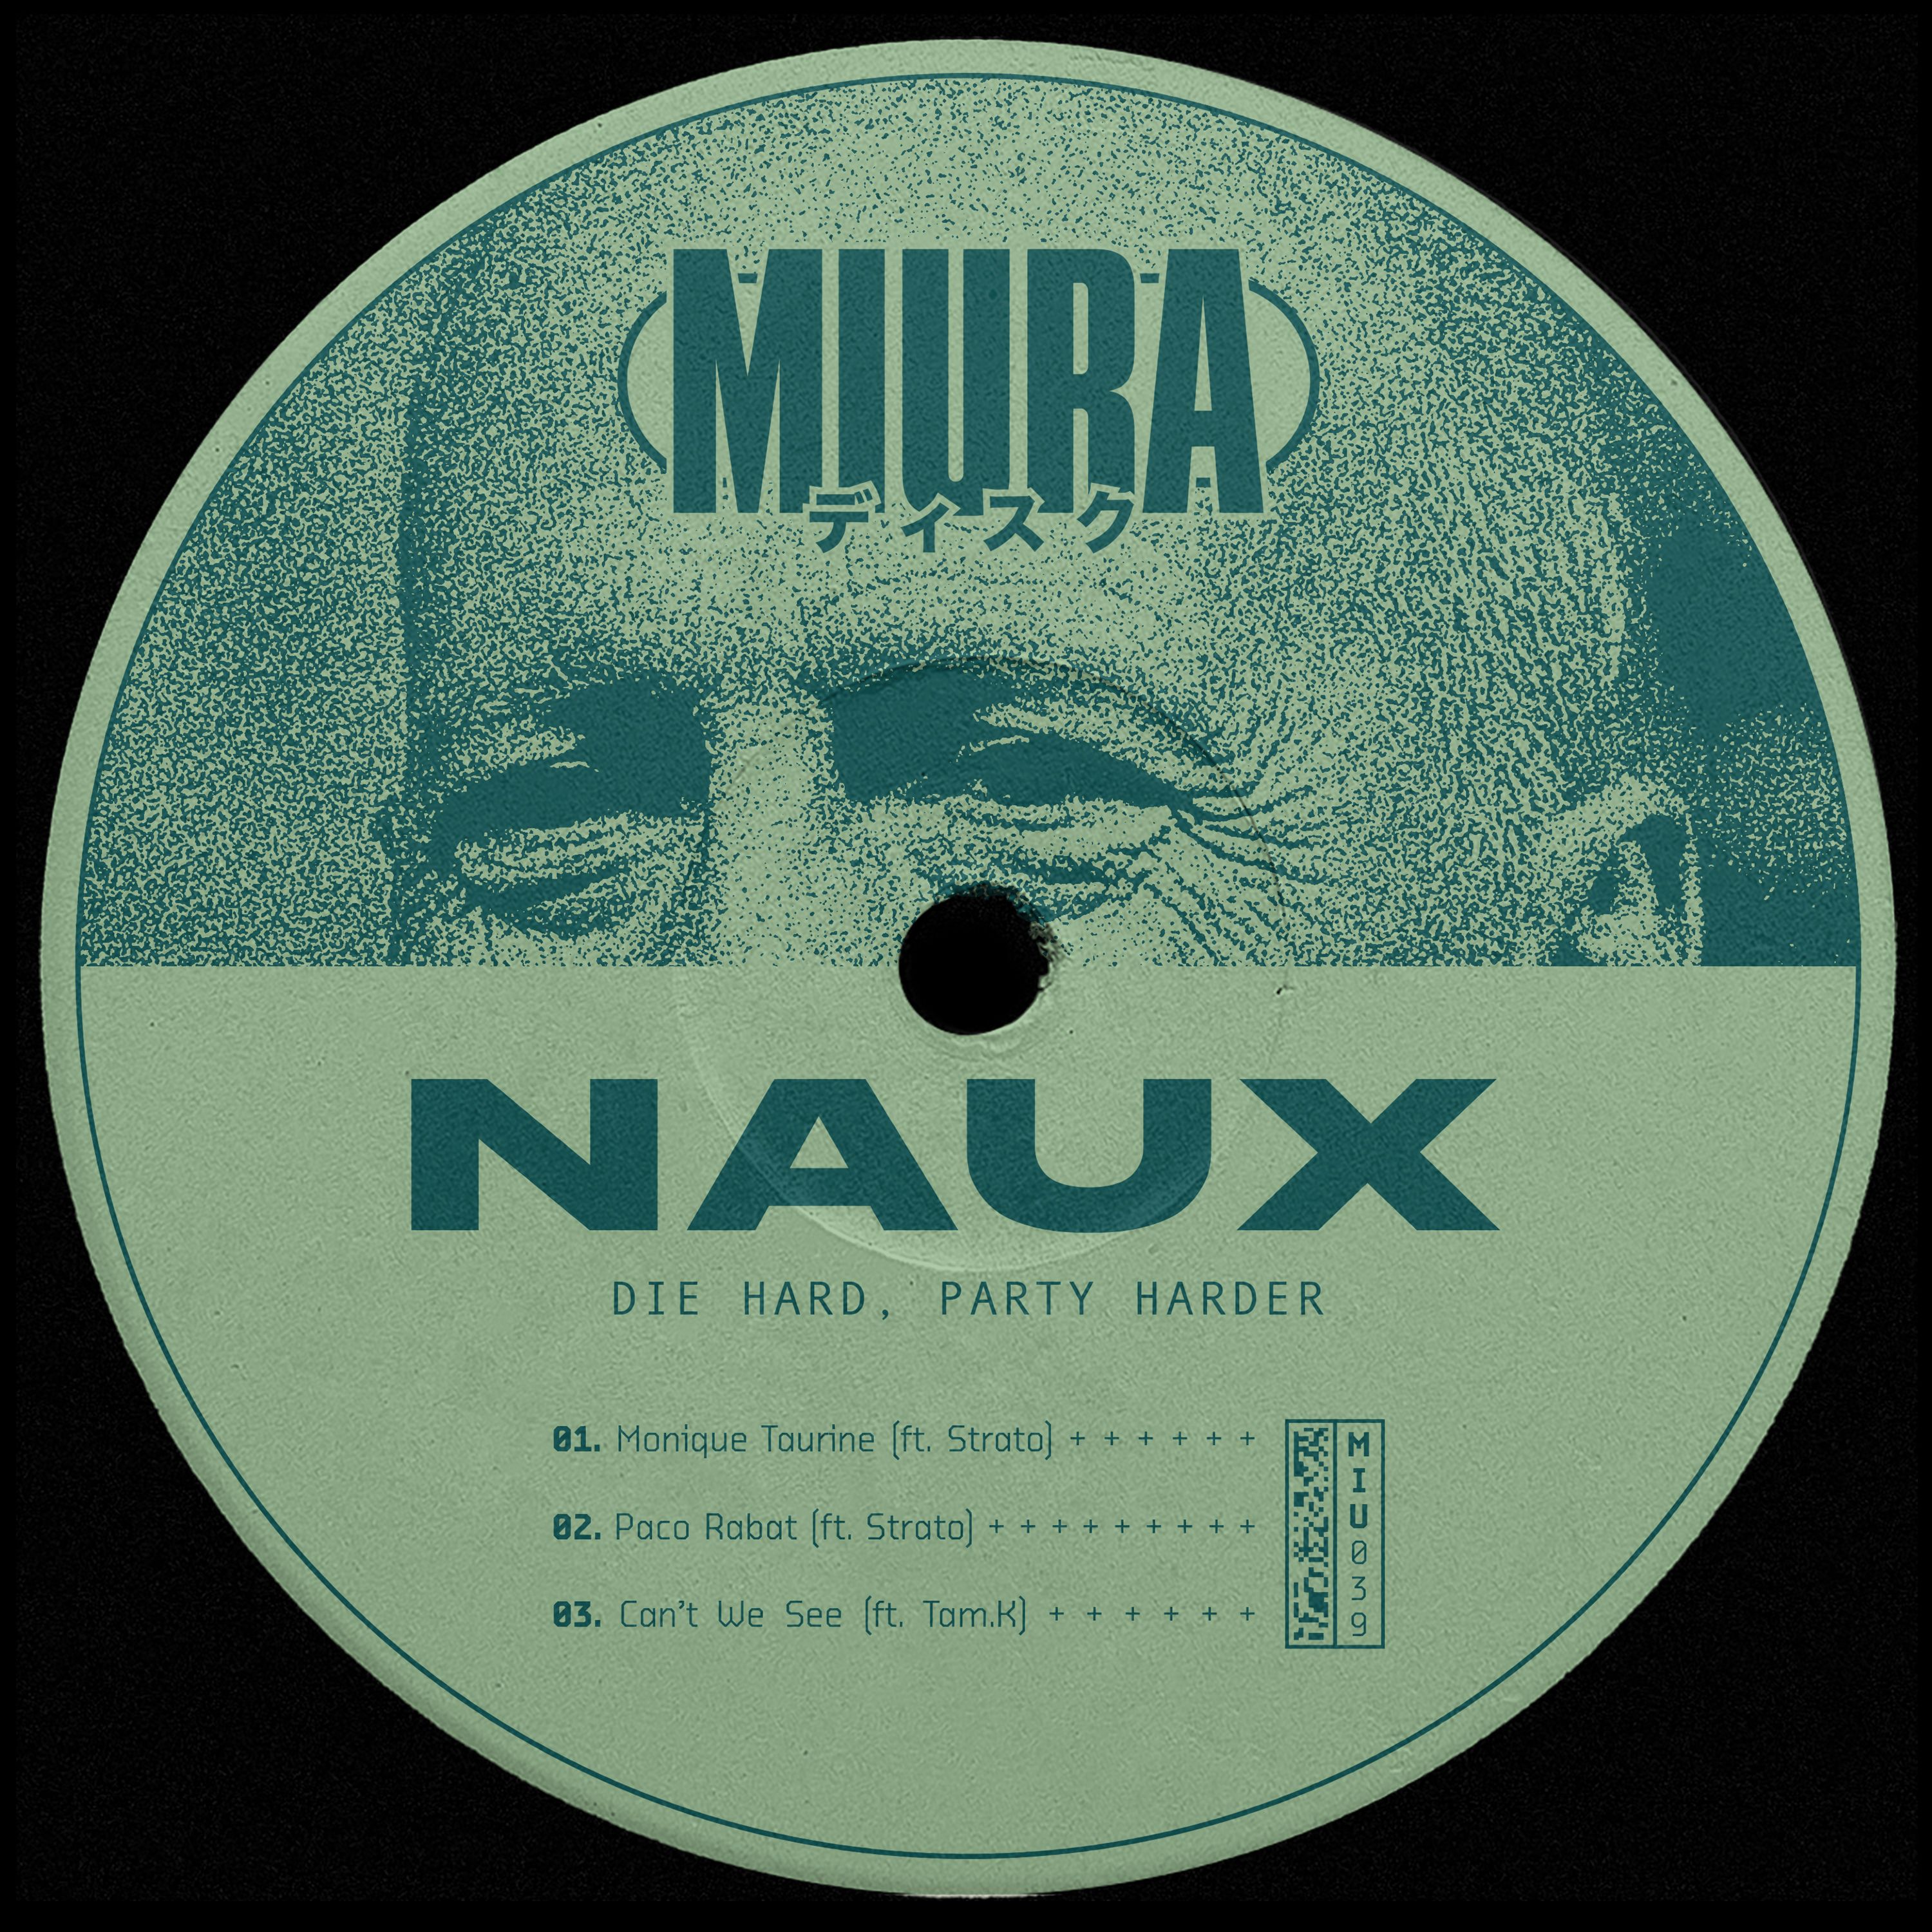 Tải xuống PREMIERE: Naux & Strato - Monique Taurine [Miura Records]